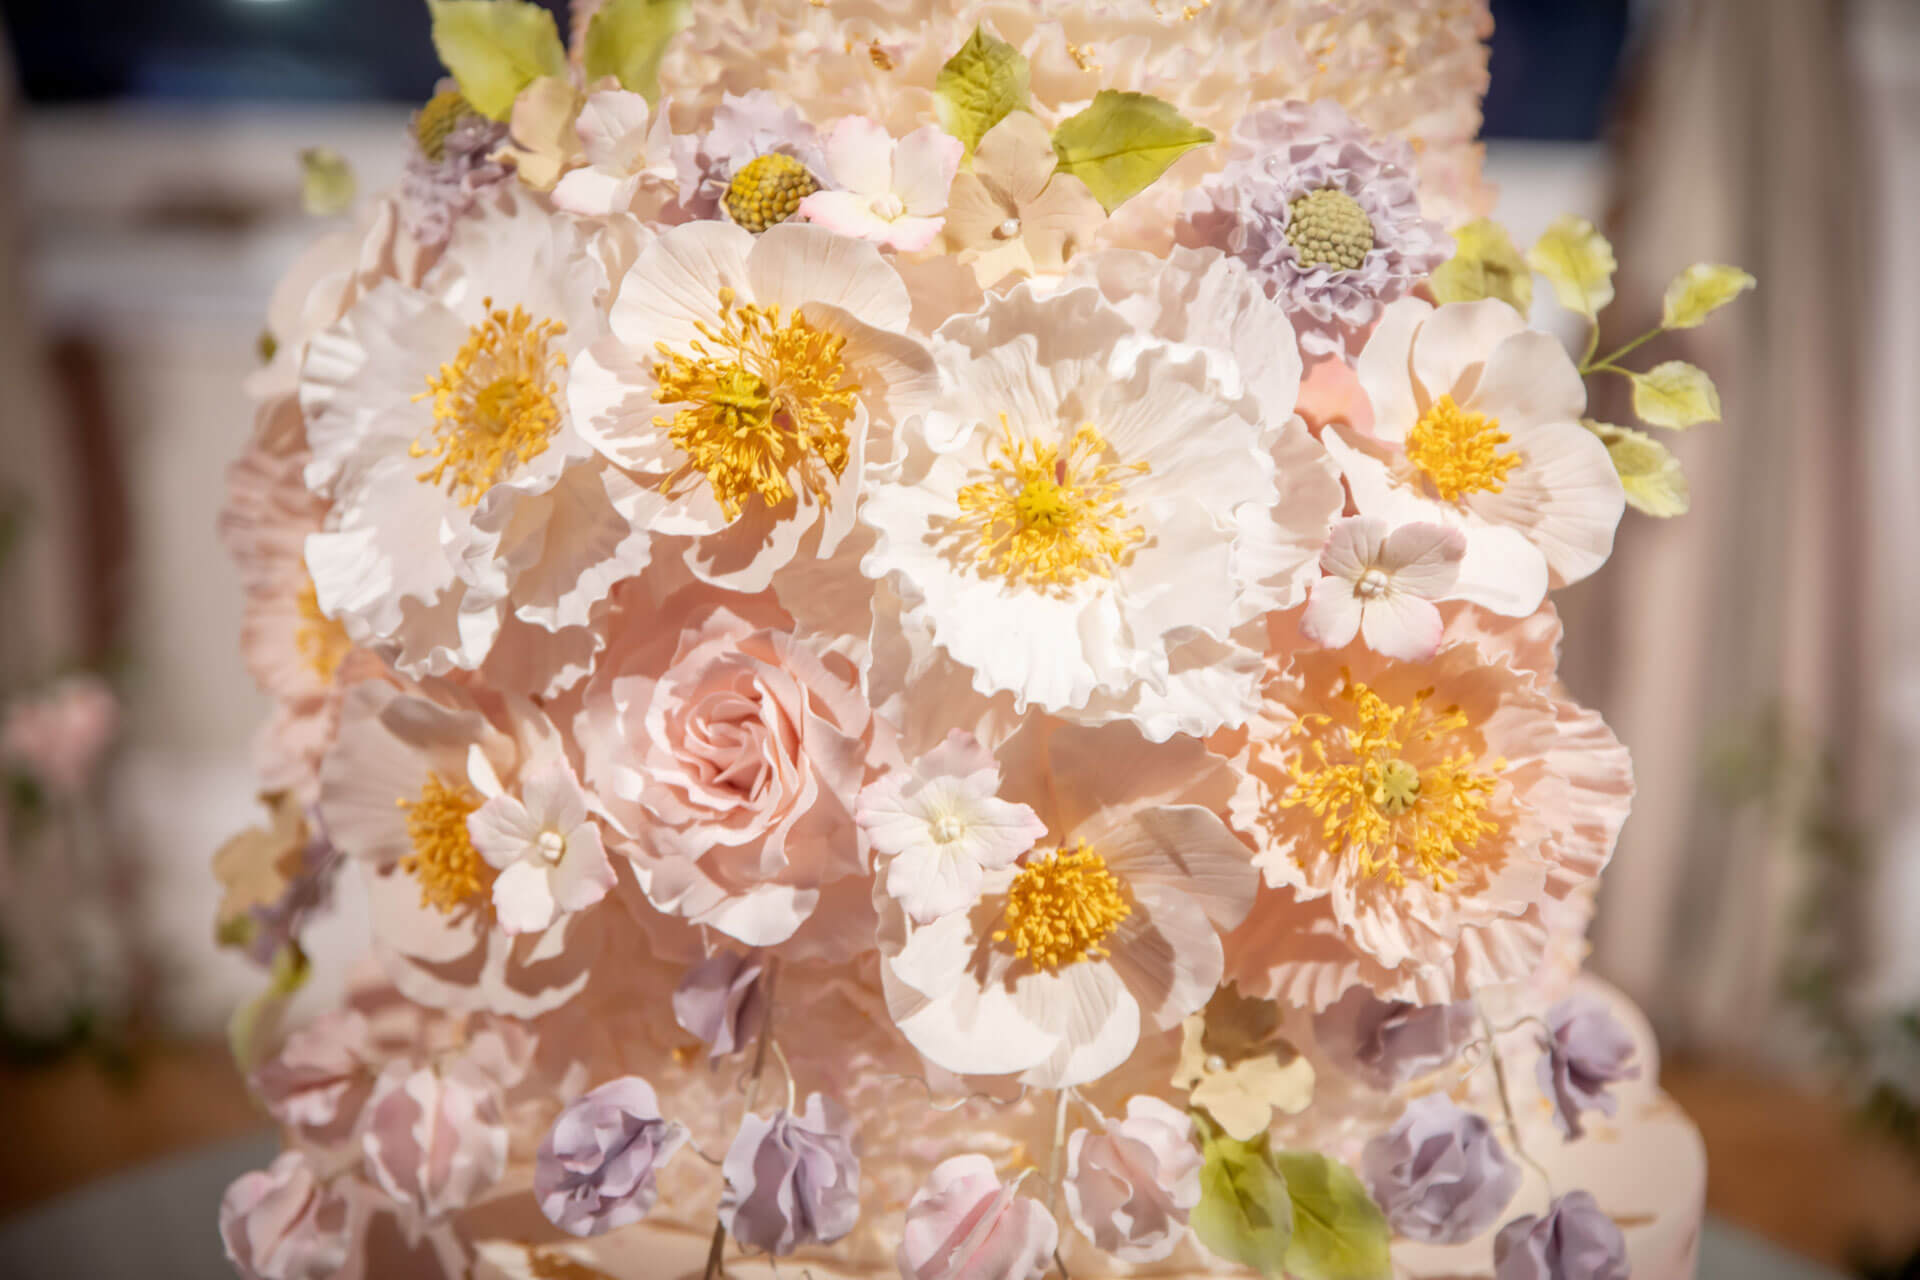 By Yevnig Luxury Wedding Cakes Ilona Corinthia London AndyMacPhotography